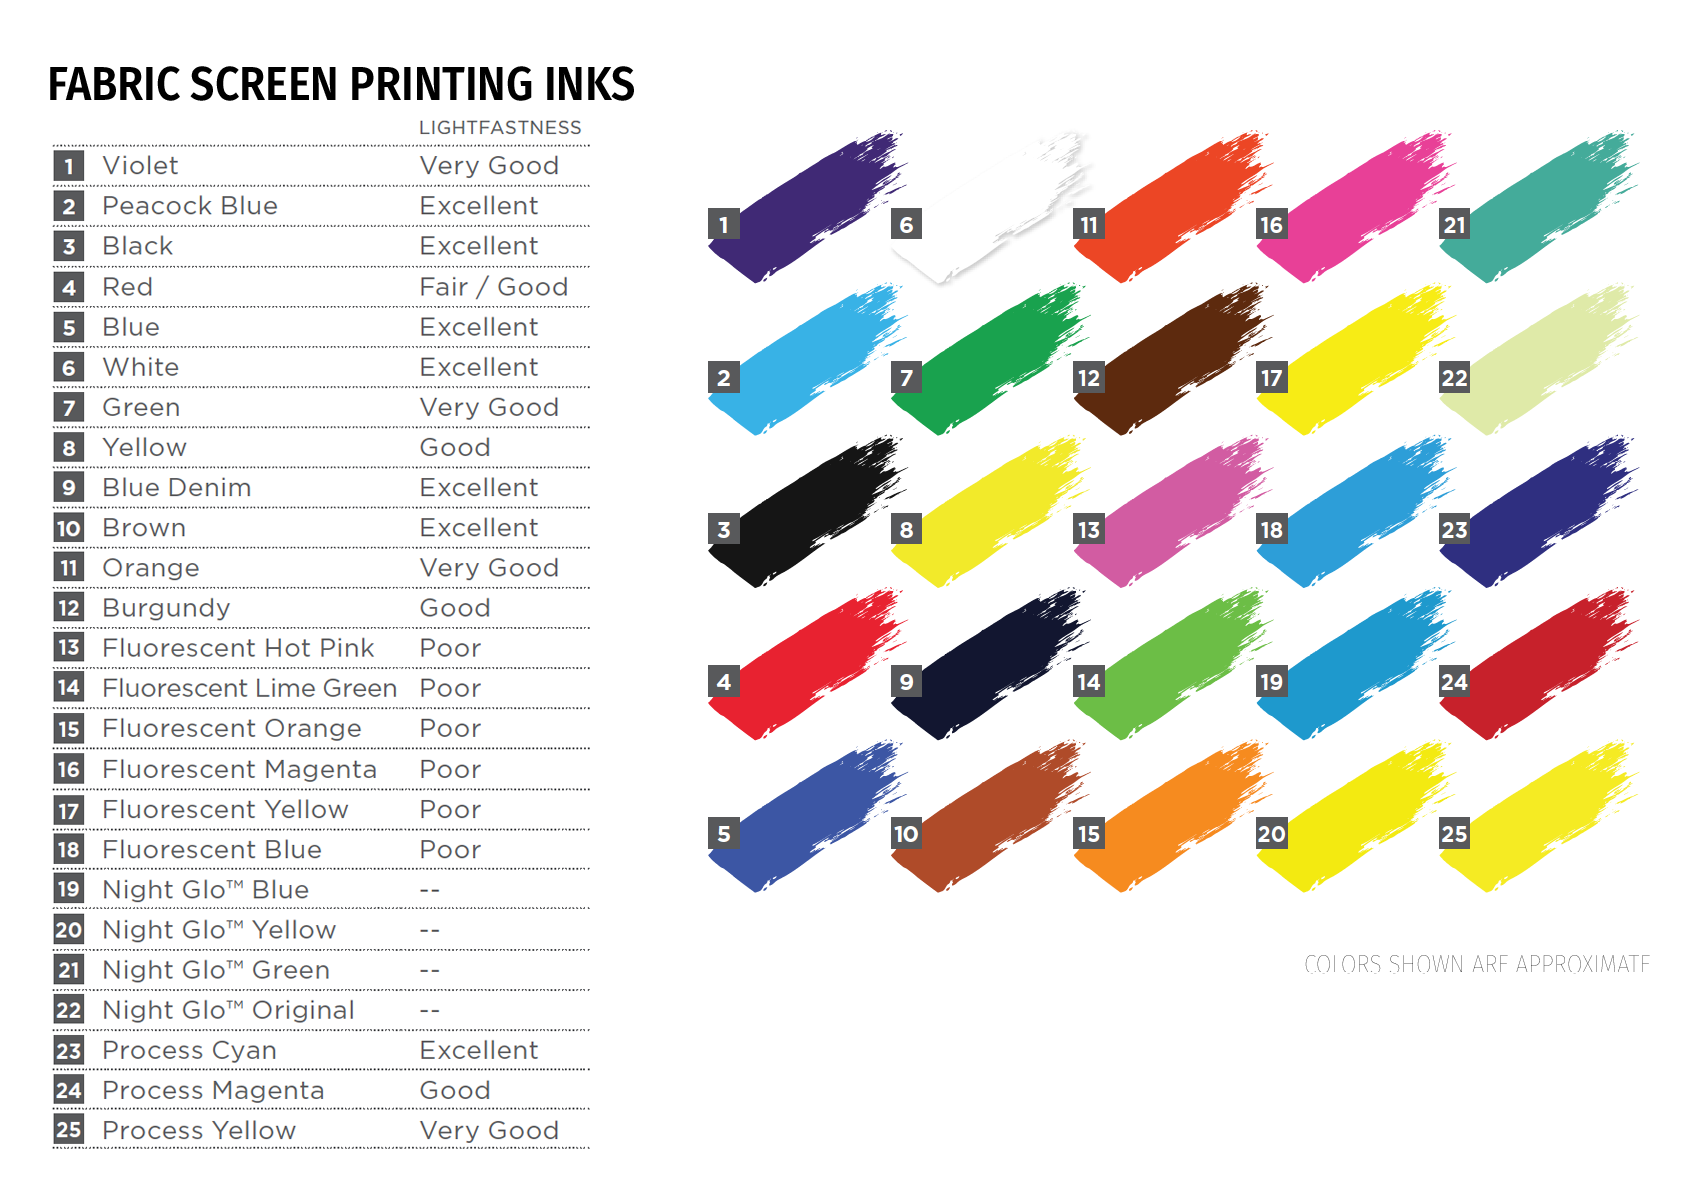 Speedball Fabric Screen Printing Ink 32 oz - RISD Store